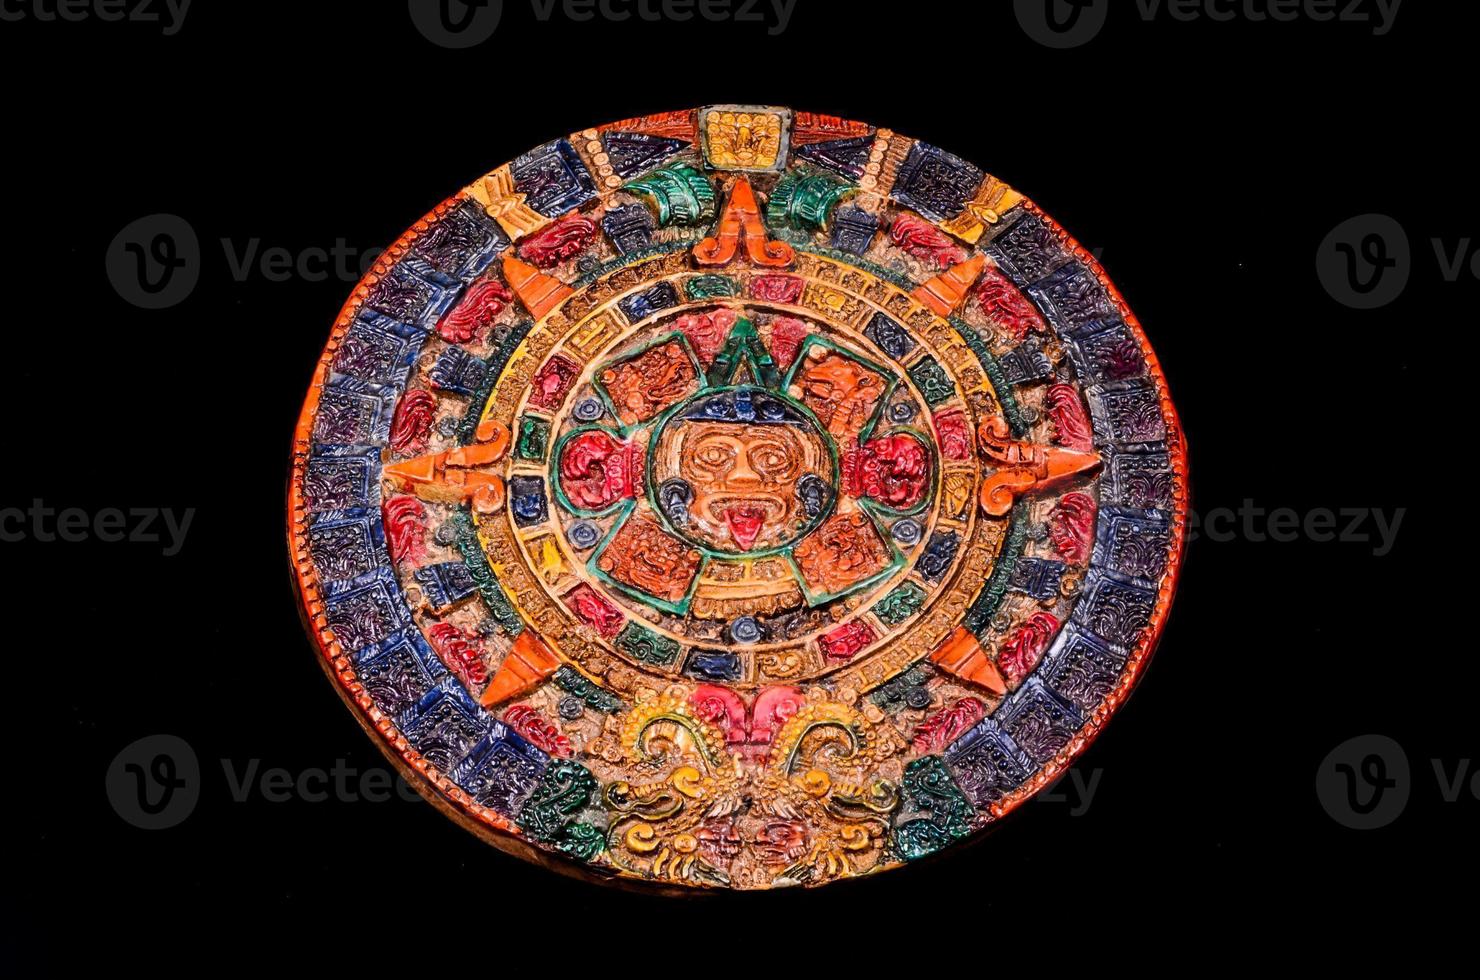 calendrier maya typique en argile colorée photo